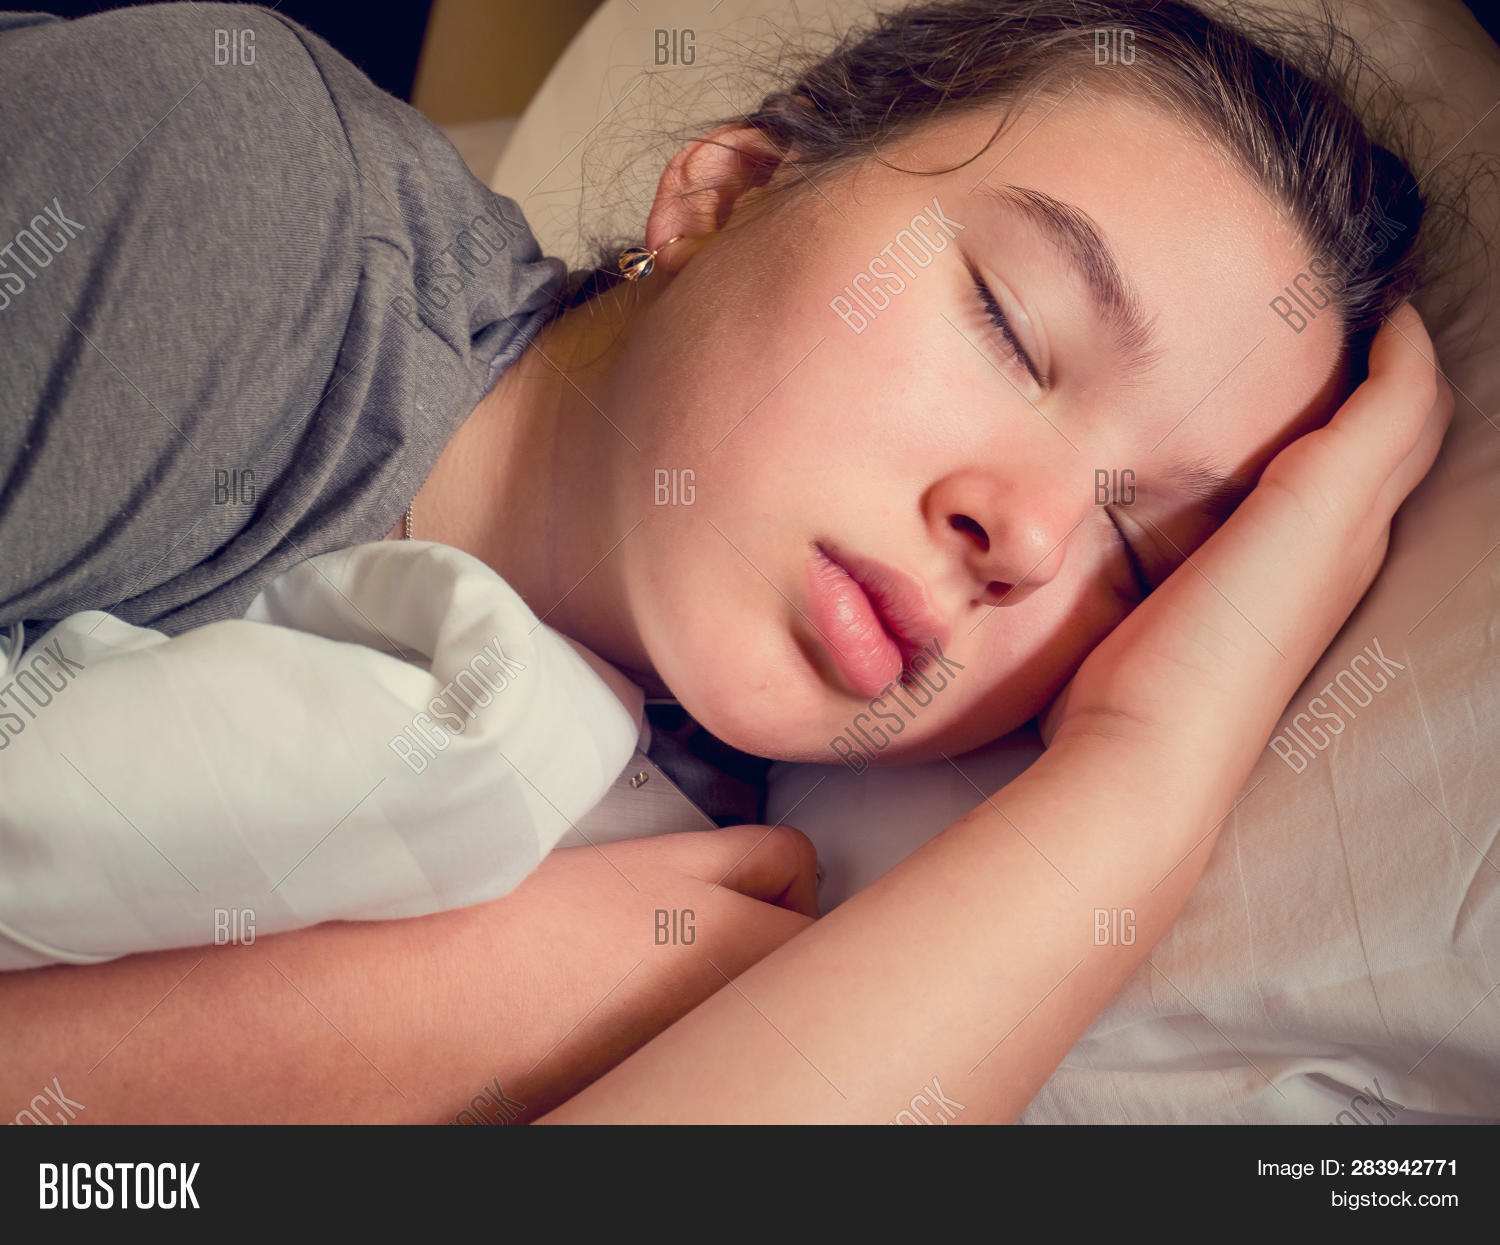 aryan varshney recommends sleeping teen pics pic